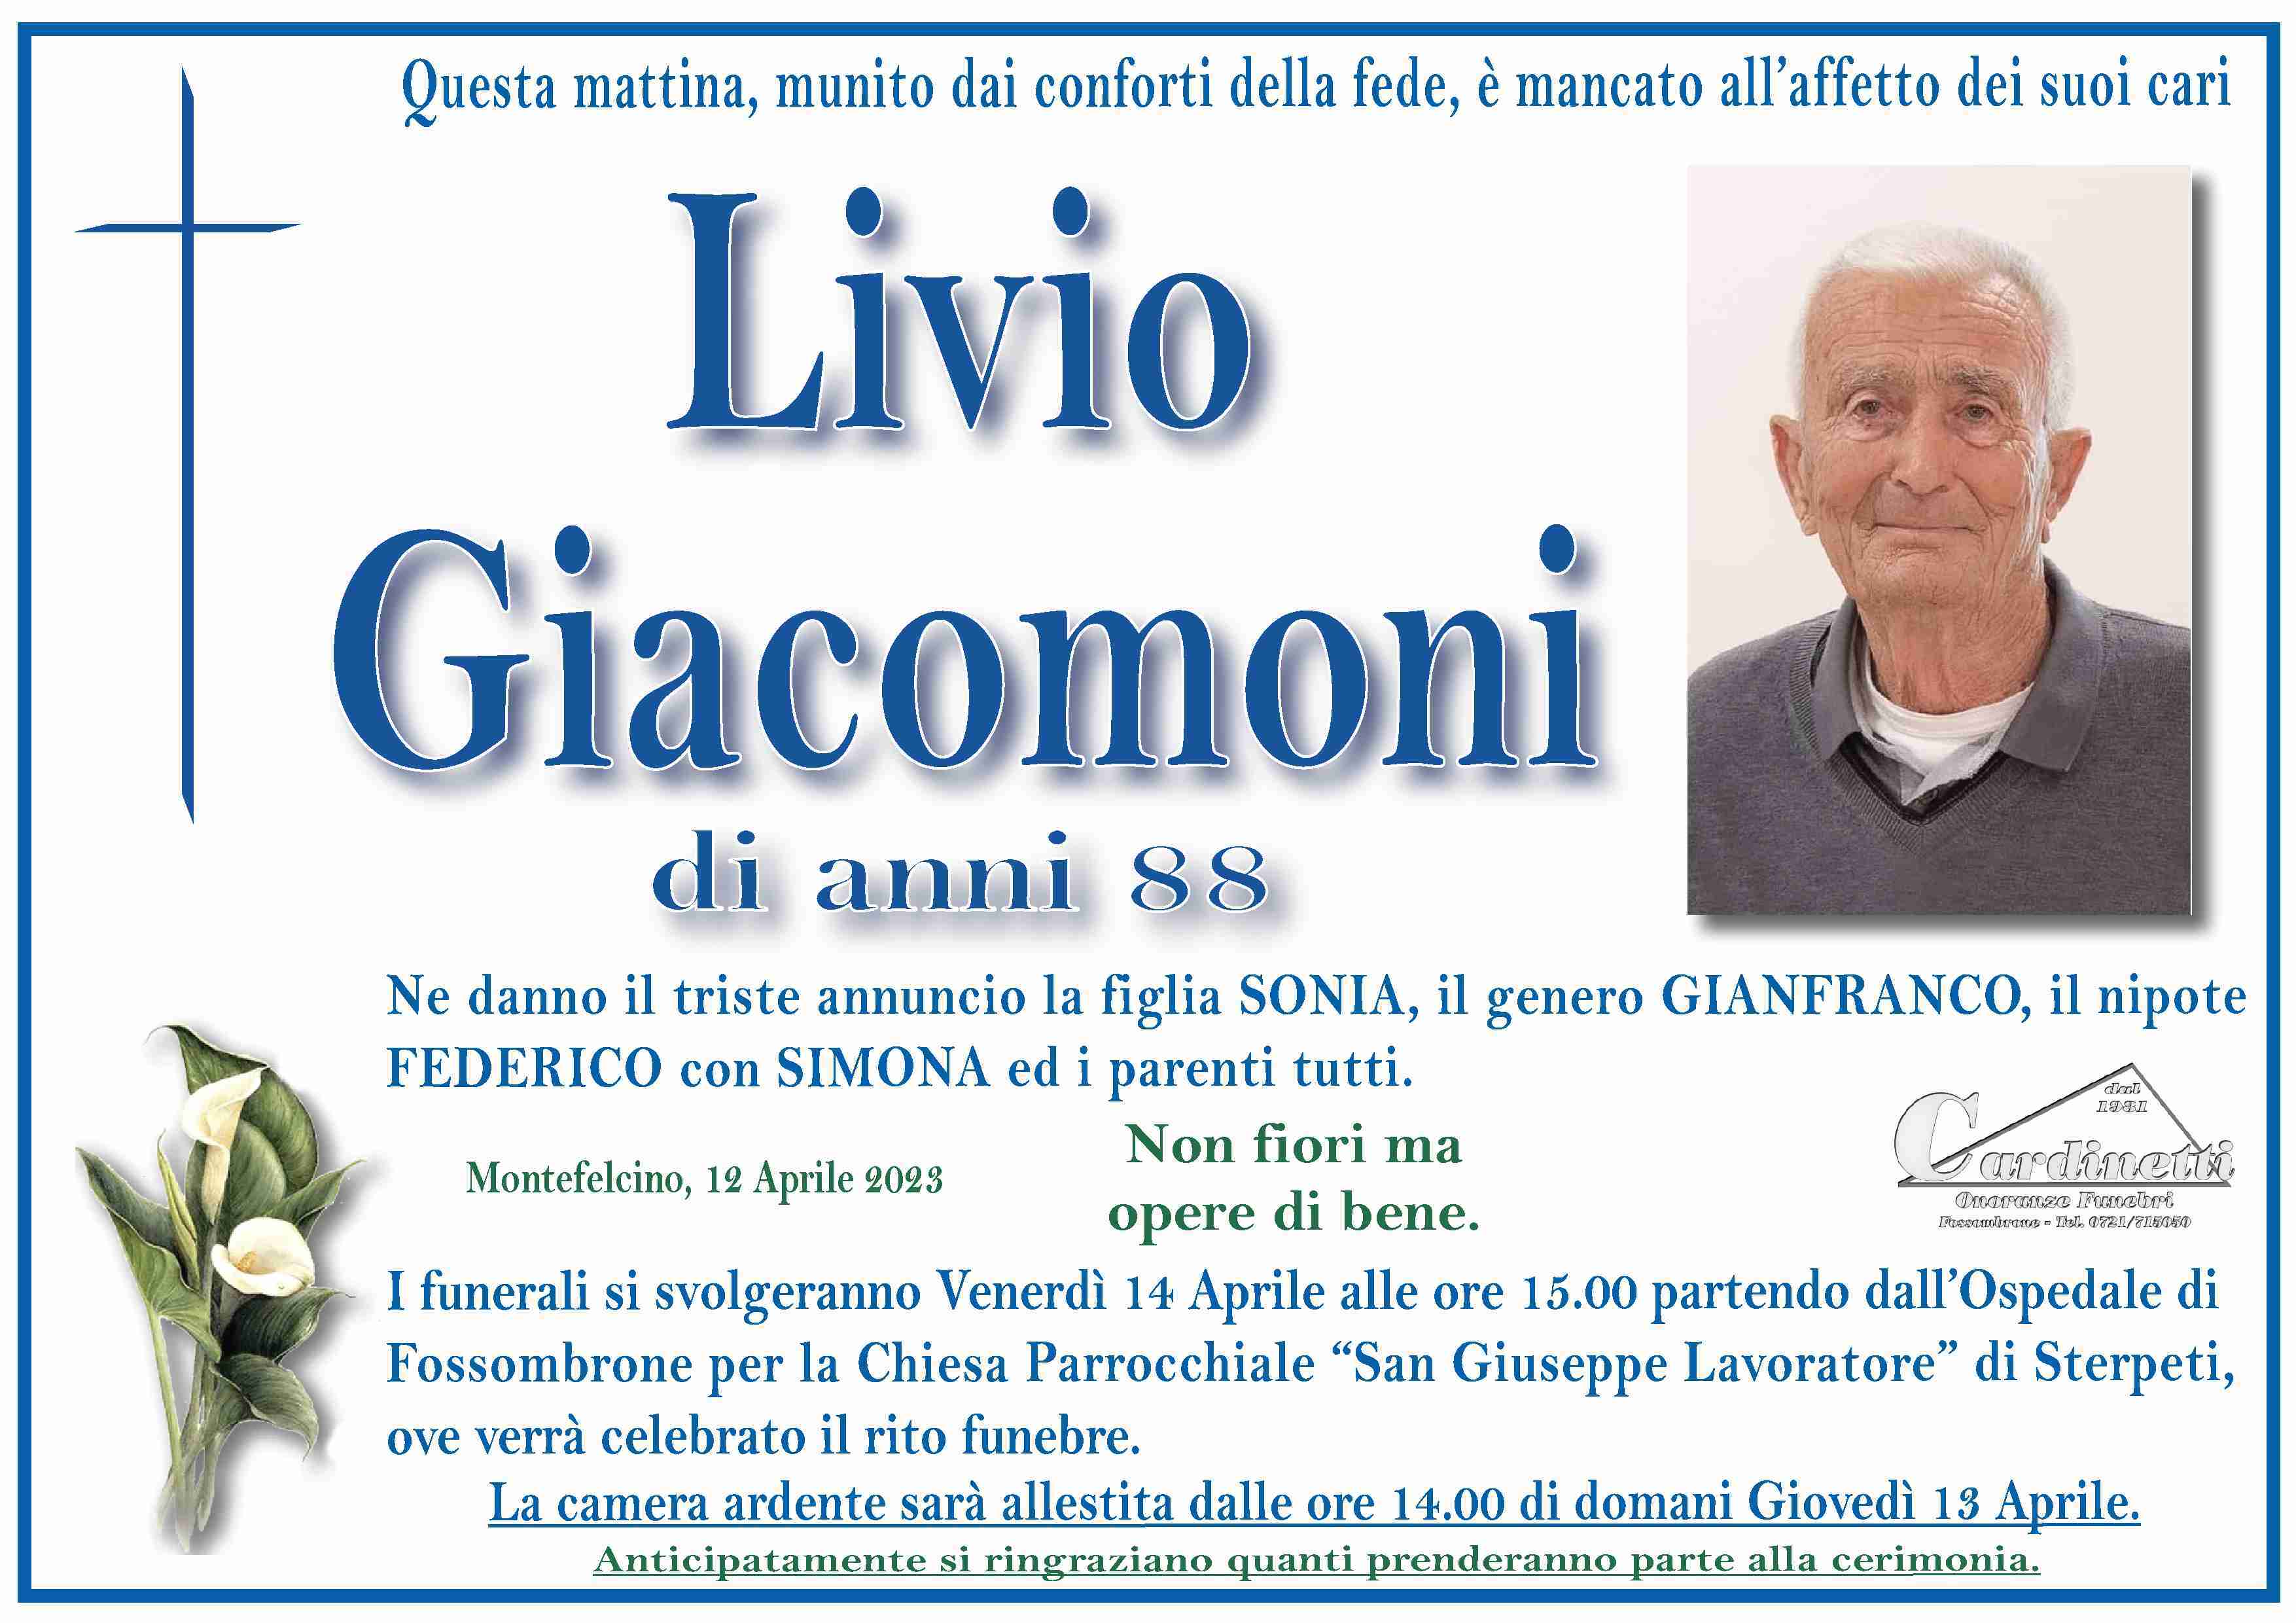 Livio Giacomoni